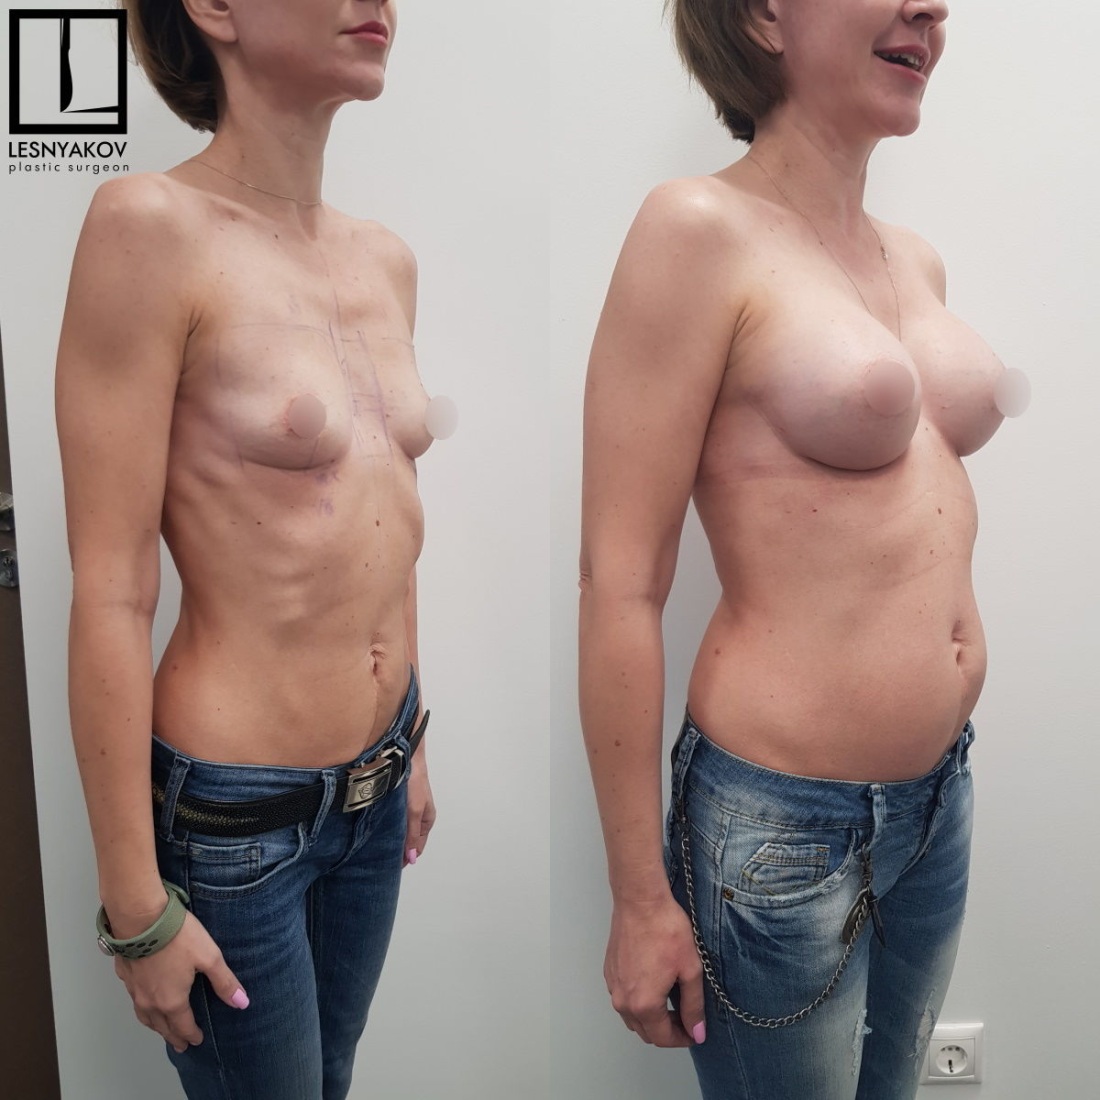 грудь 2 размера без операции фото 100